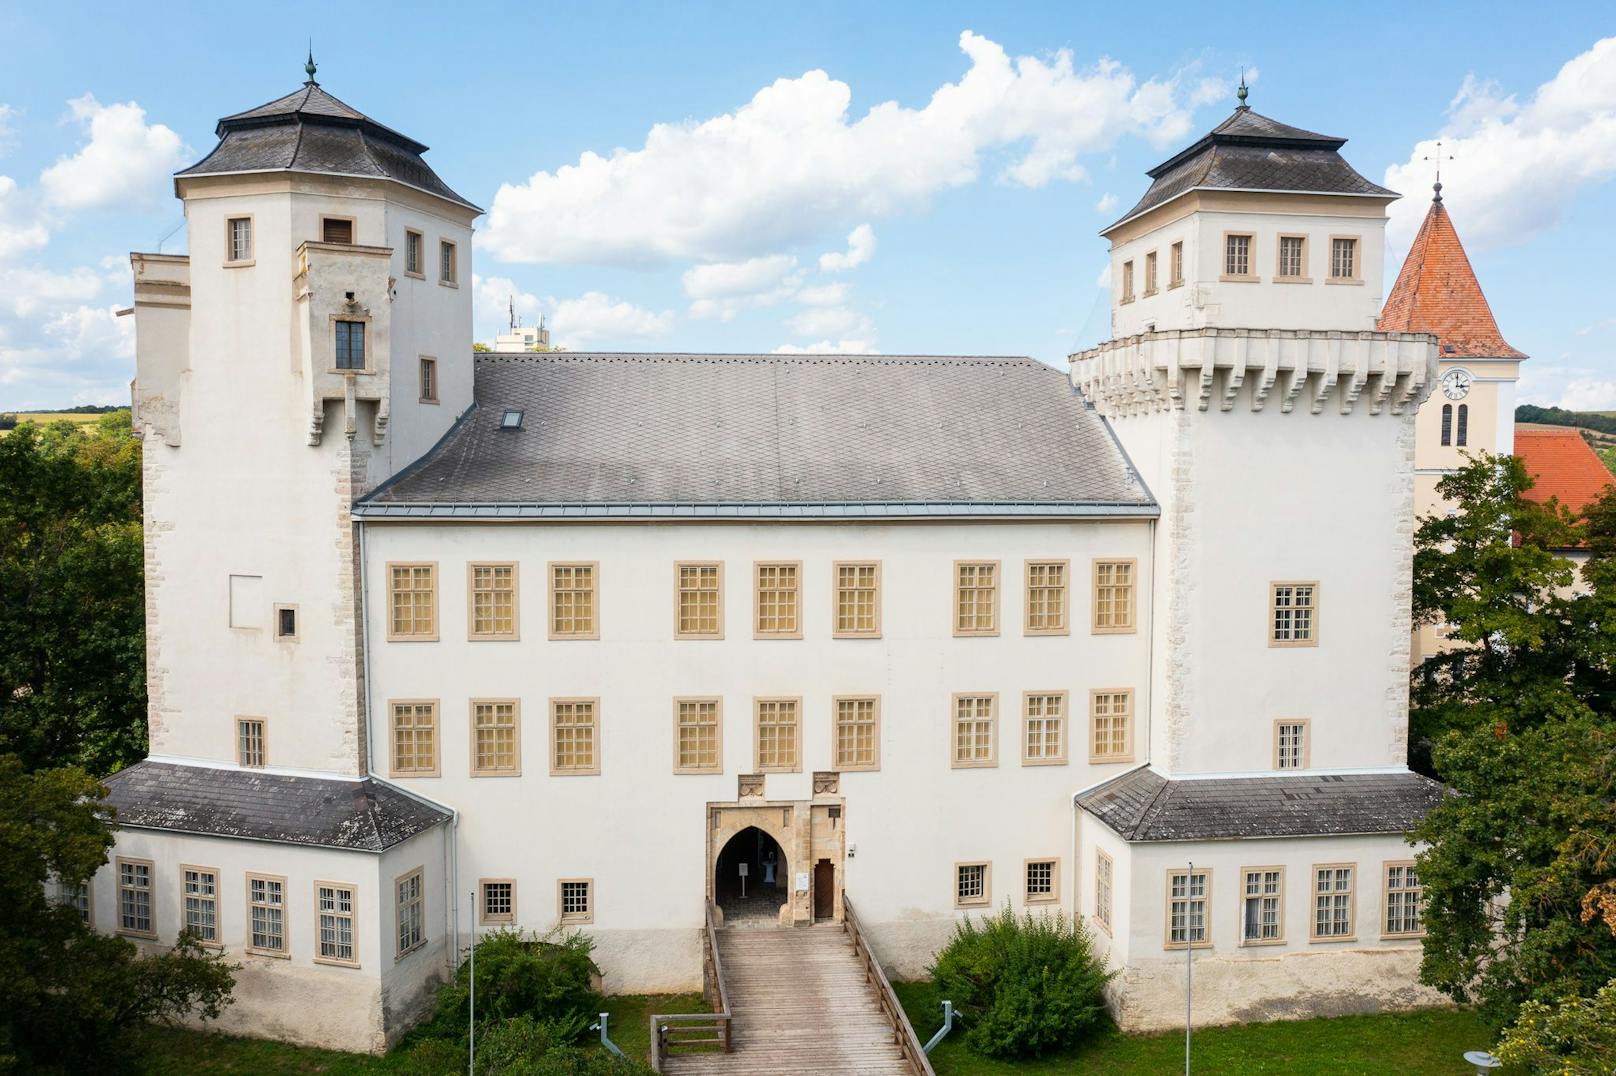 MAMUZ Schloss Asparn an der Zaya